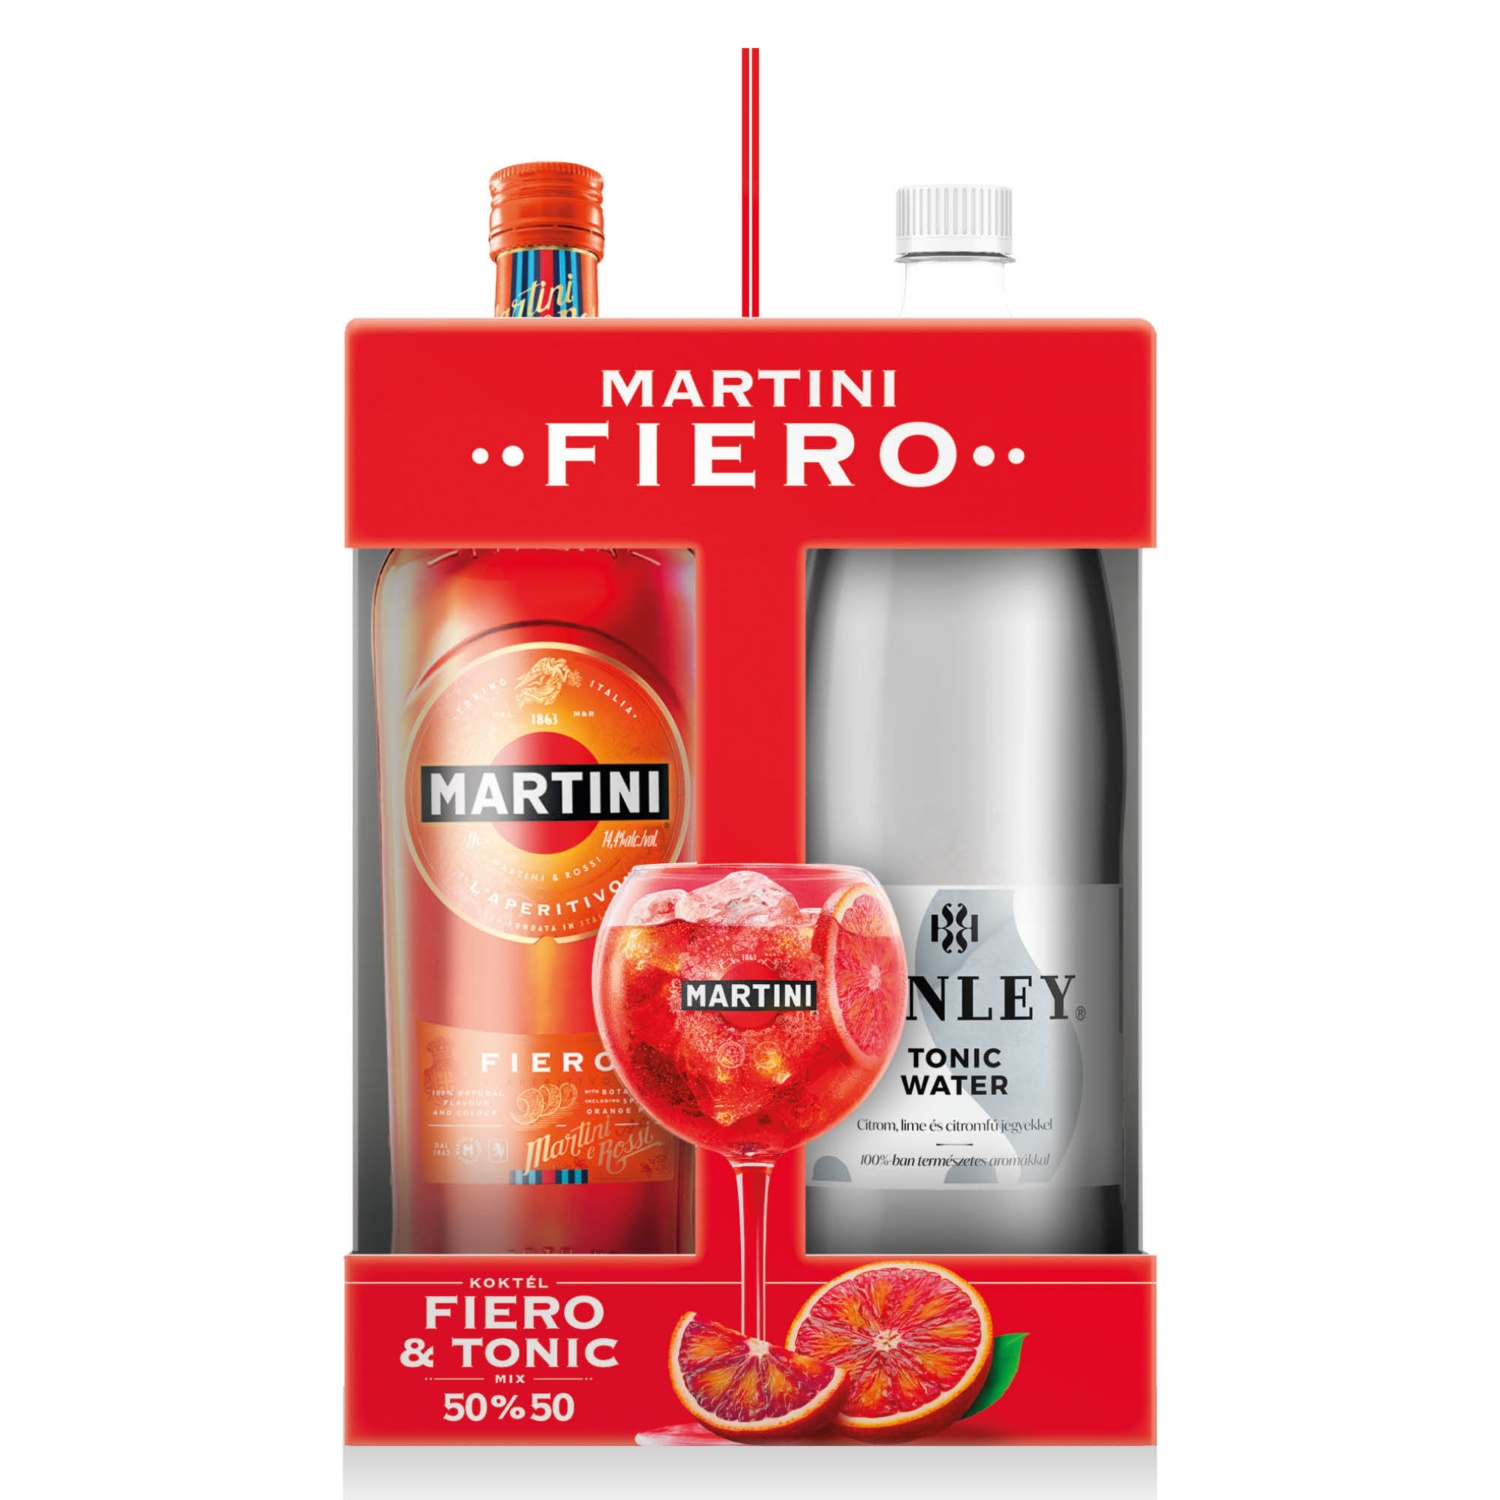 MARTINI / KINLEY Fiero & Tonic csomag